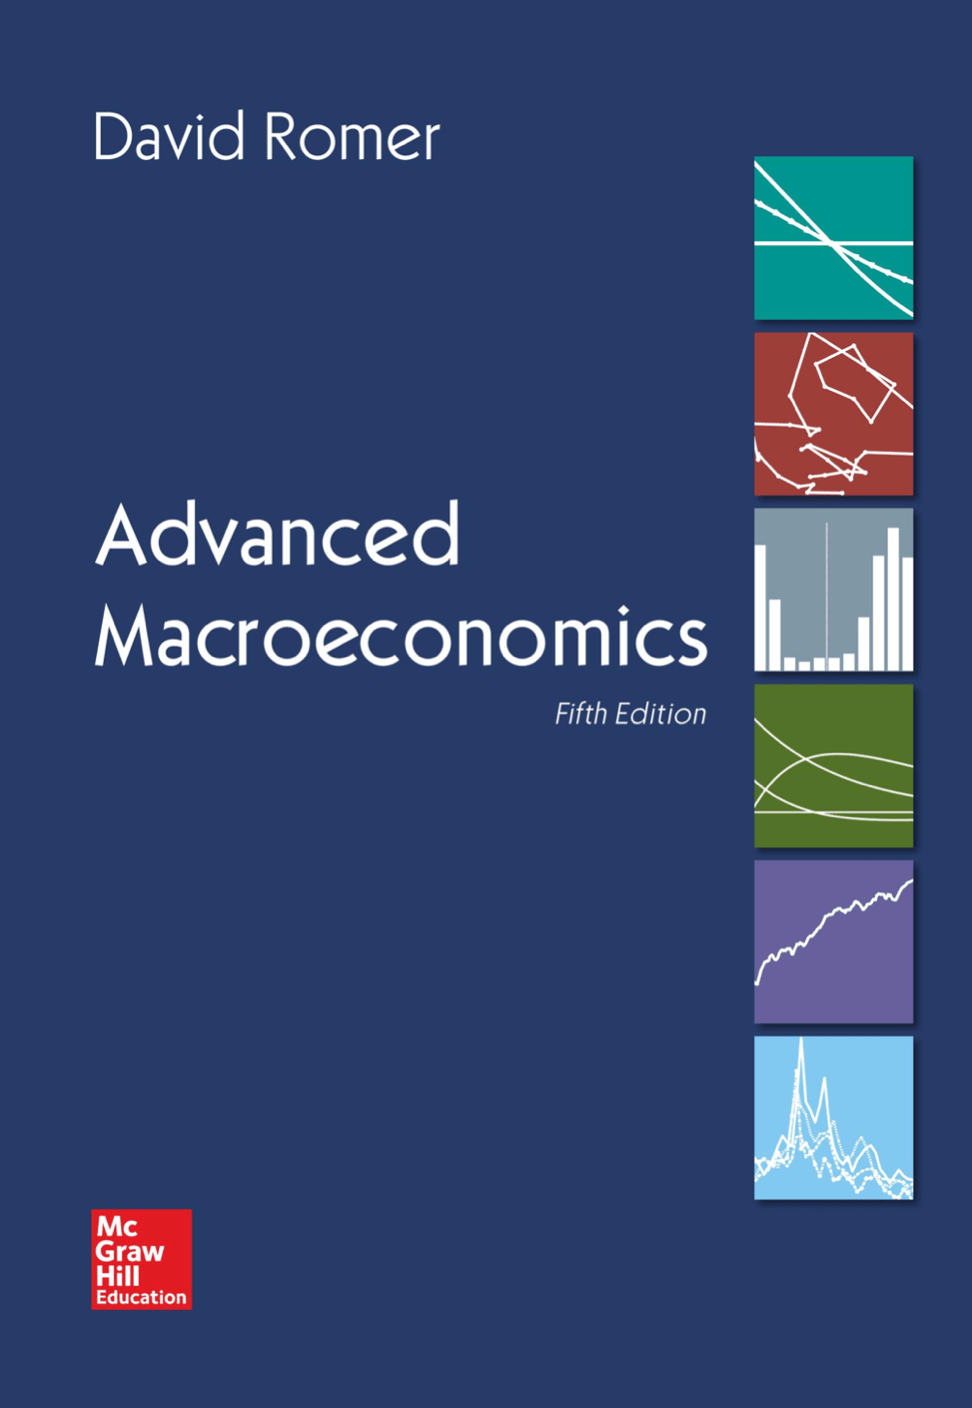 ADVANCED MACROECONOMICS: Fifth Edition book